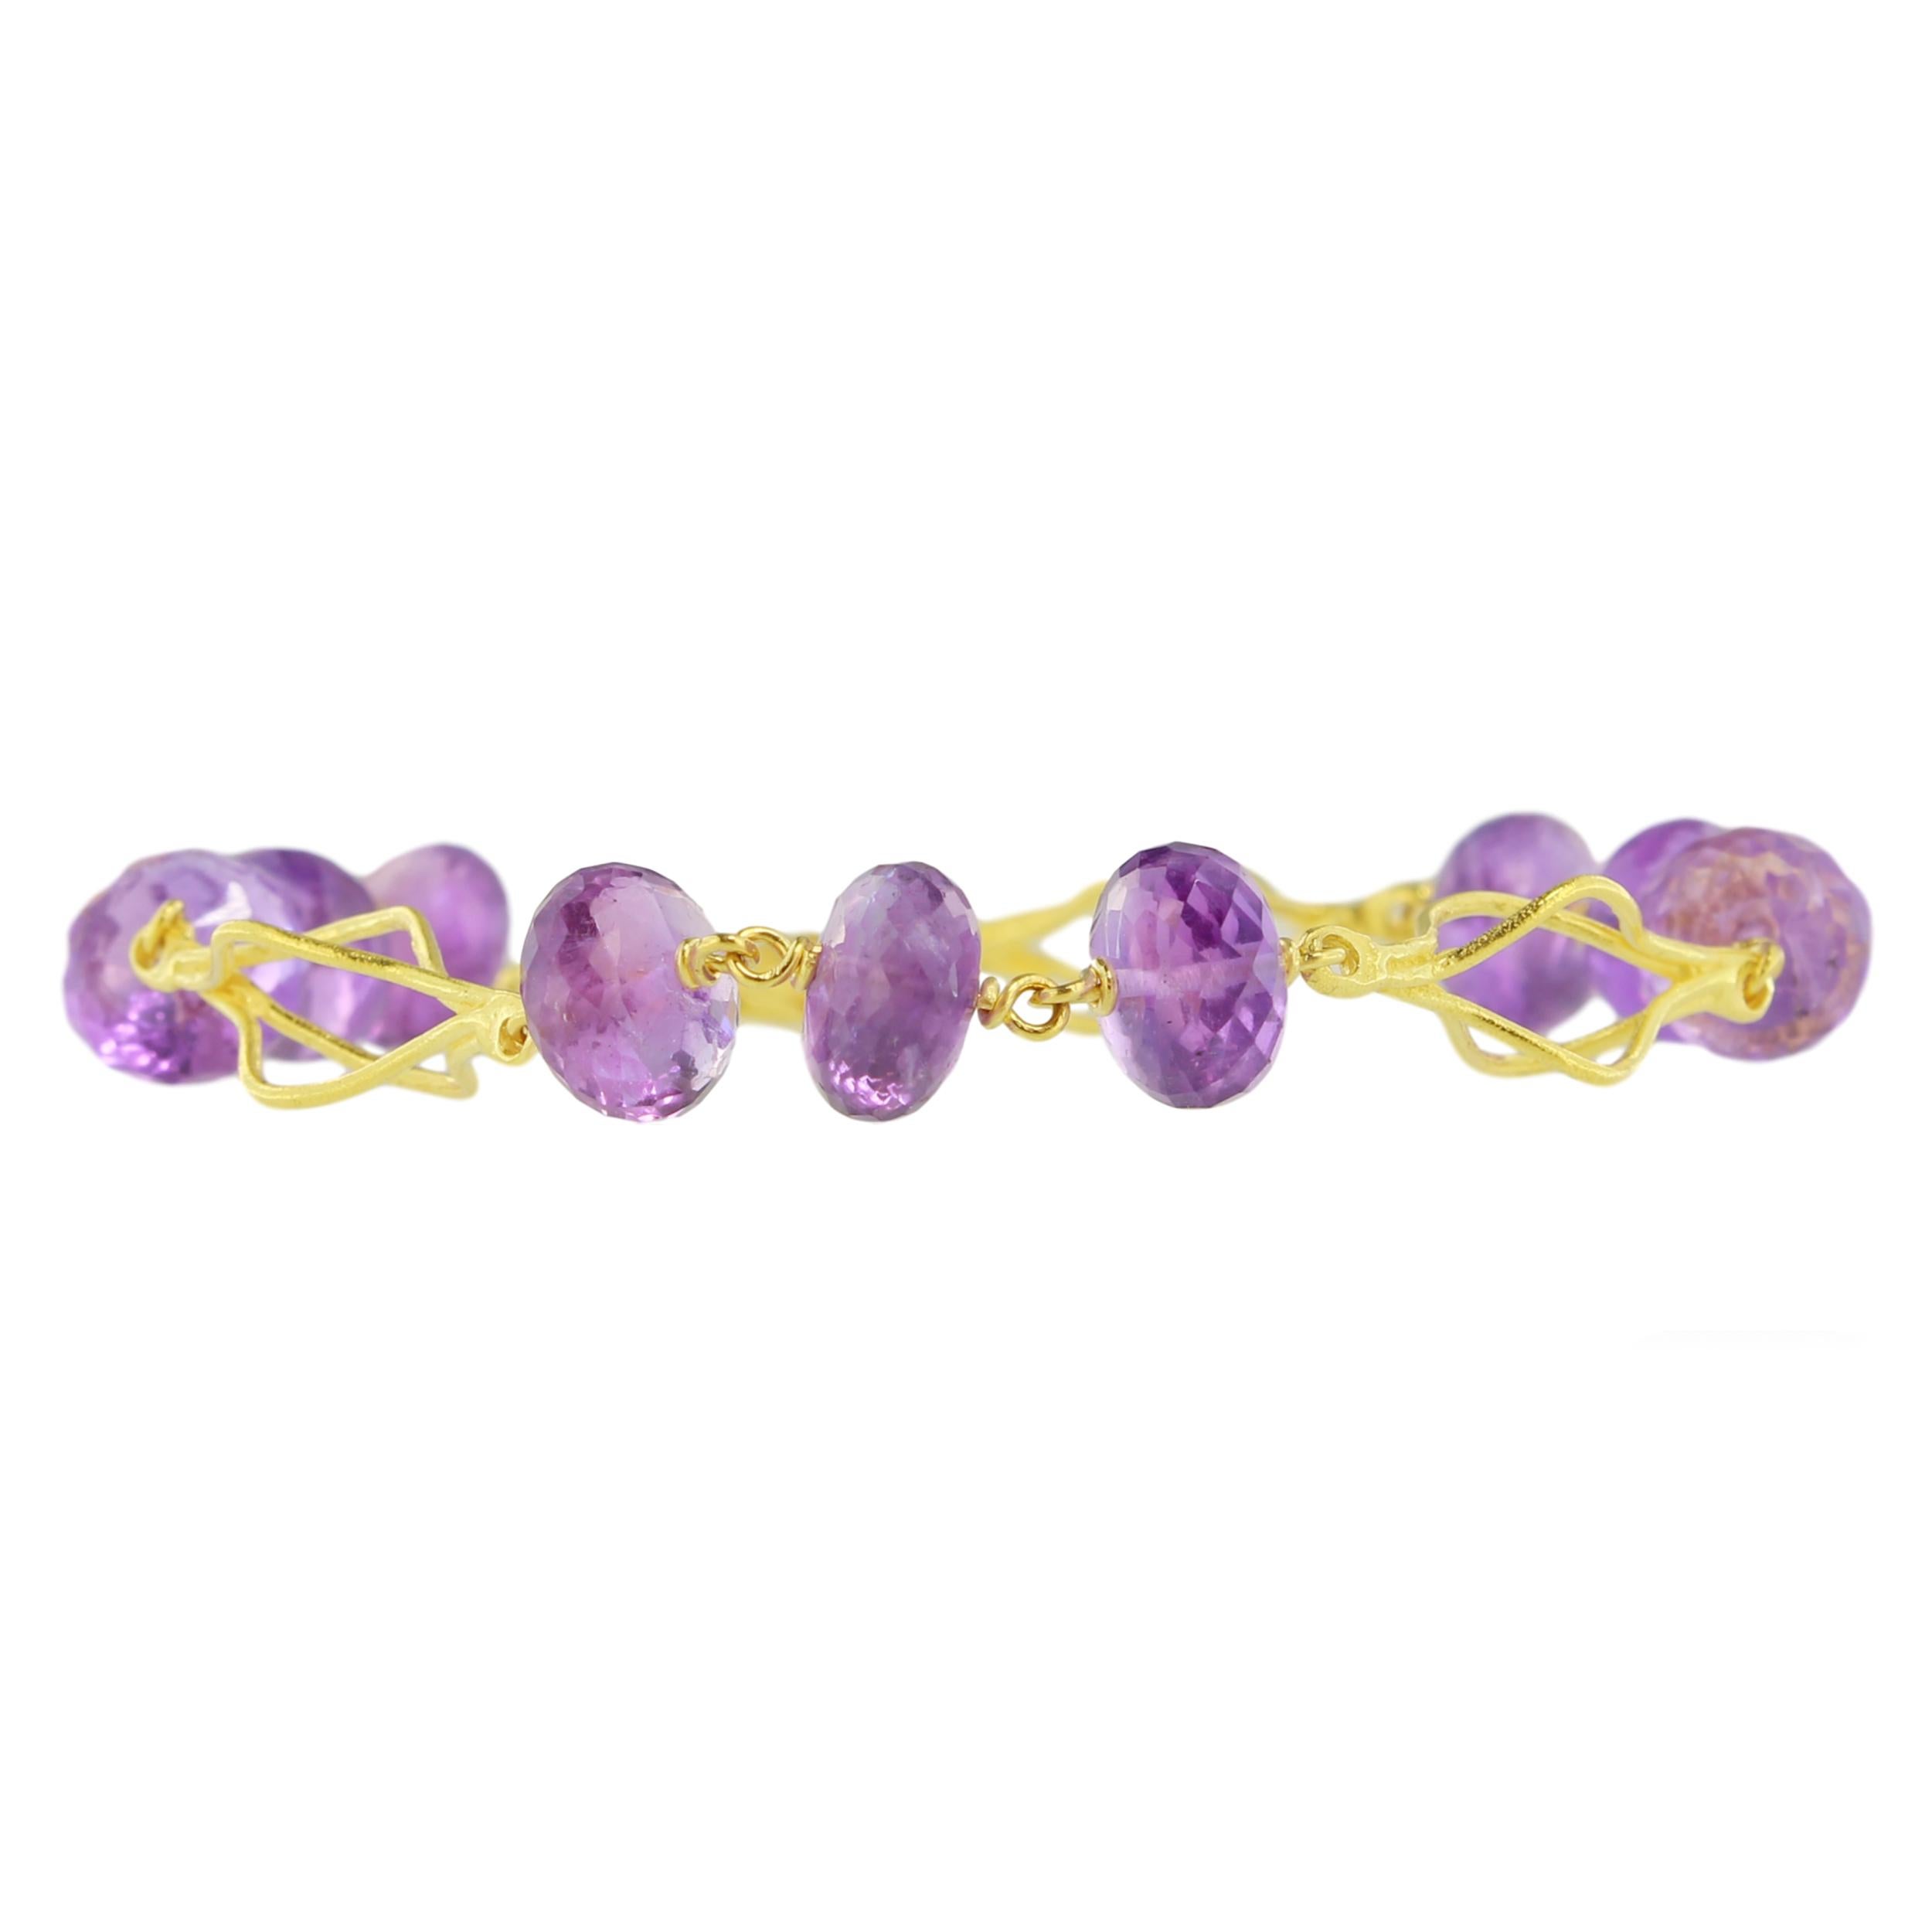 Exquisite Purple Amethyst Gemstones Satin Yellow Gold Fashion Bracelet, from Sacchi's 